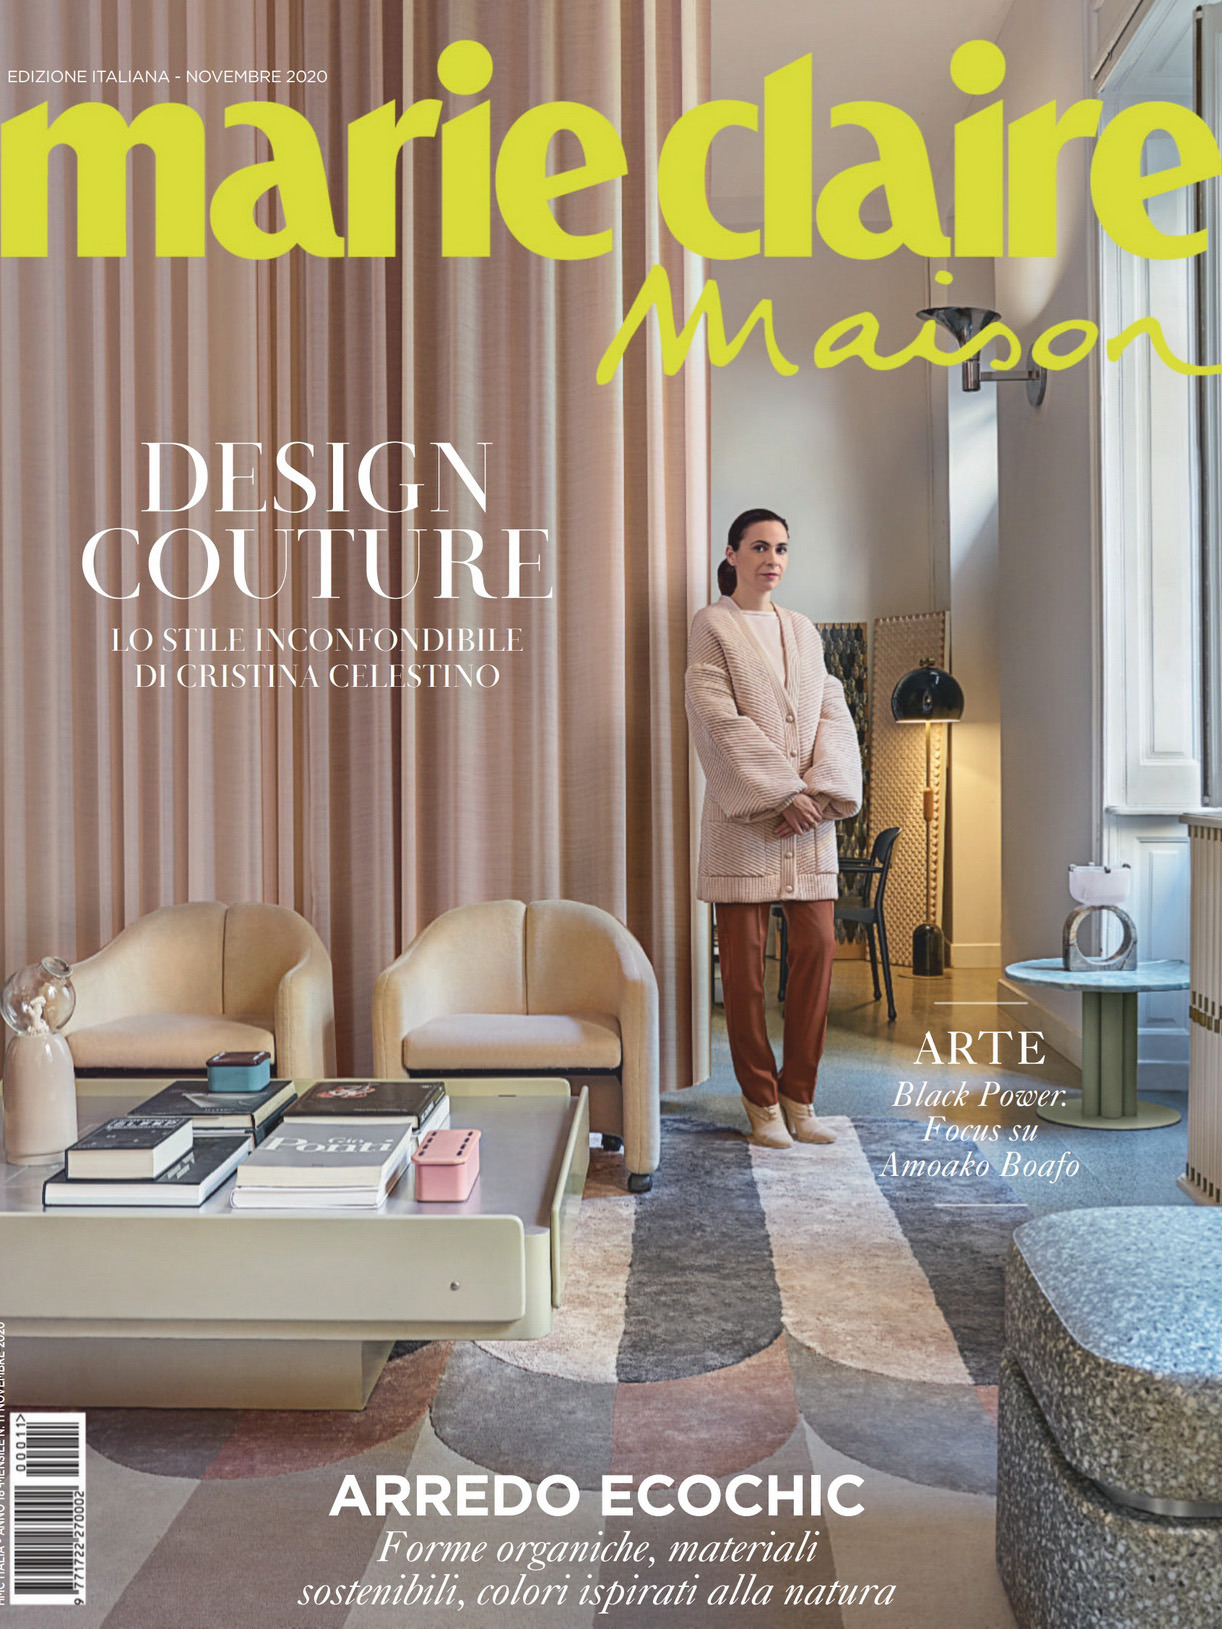 《Marie Claire maison》意大利版时尚室内设计杂志2020年11月号